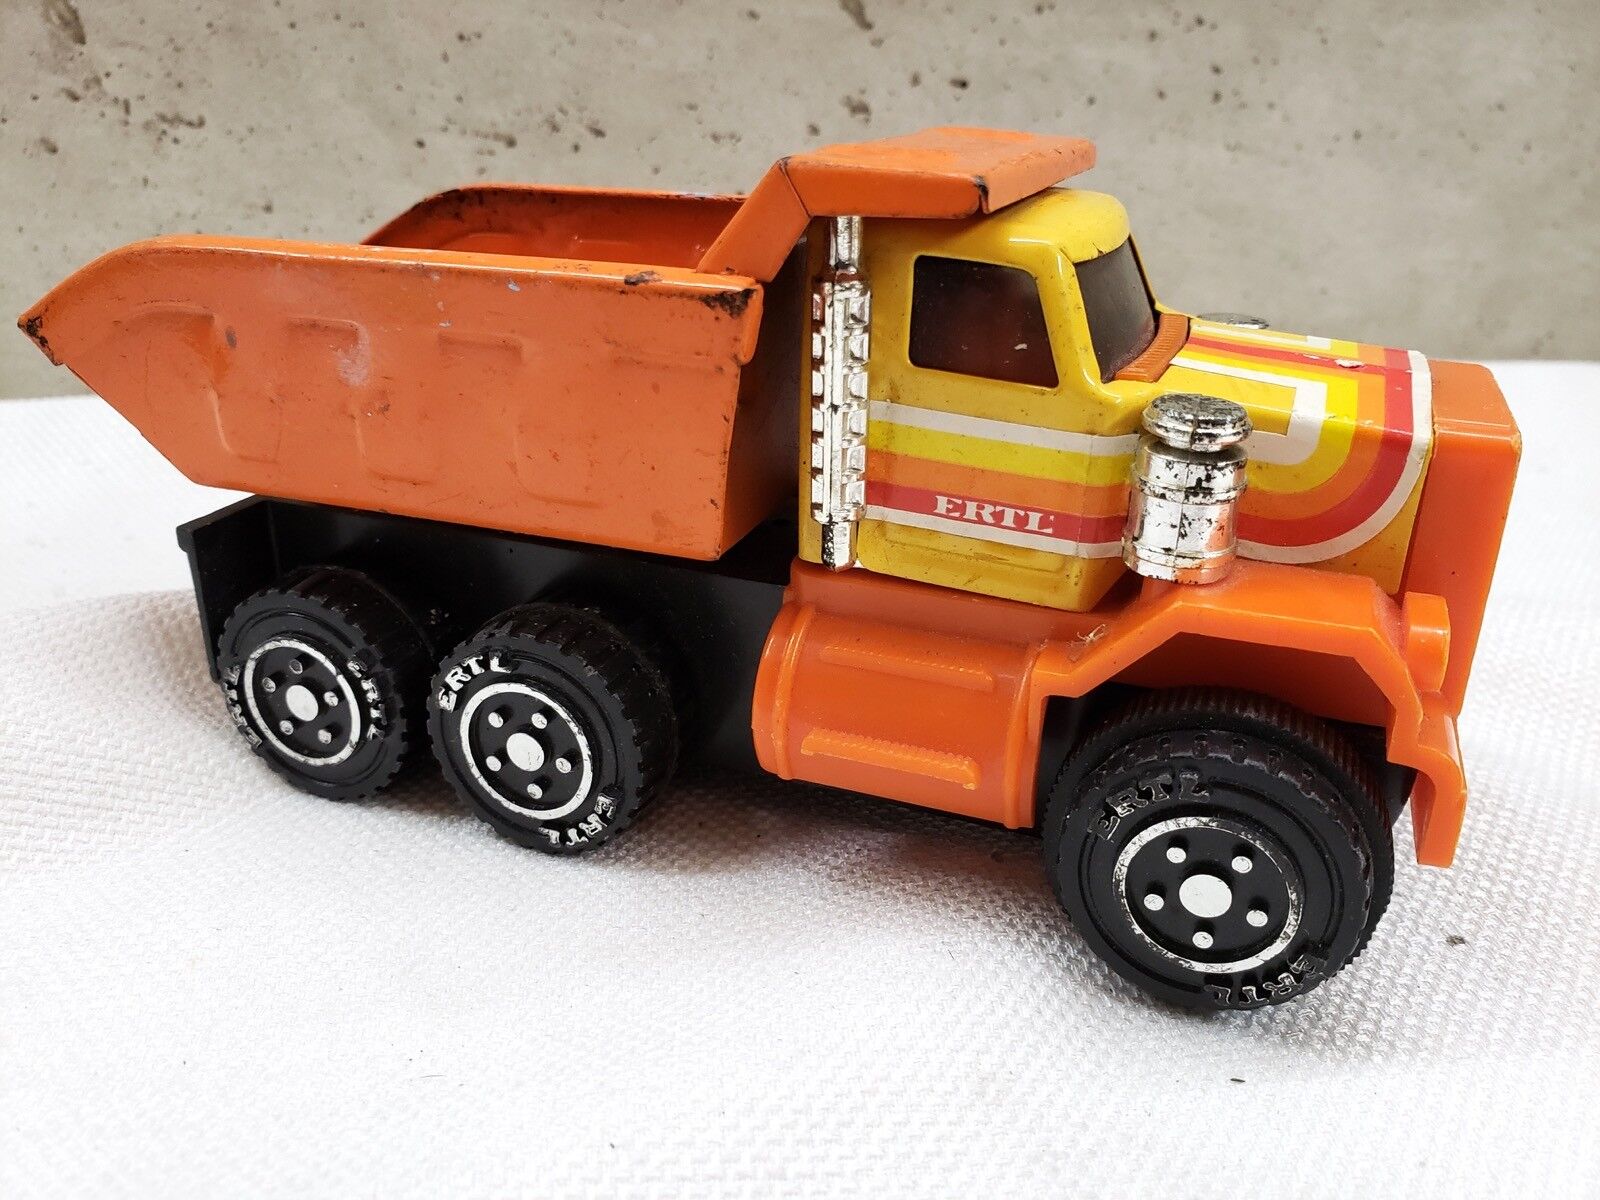 Ertl Orange Pressed Metal and Plastic Dump Truck Vintage 1980’s